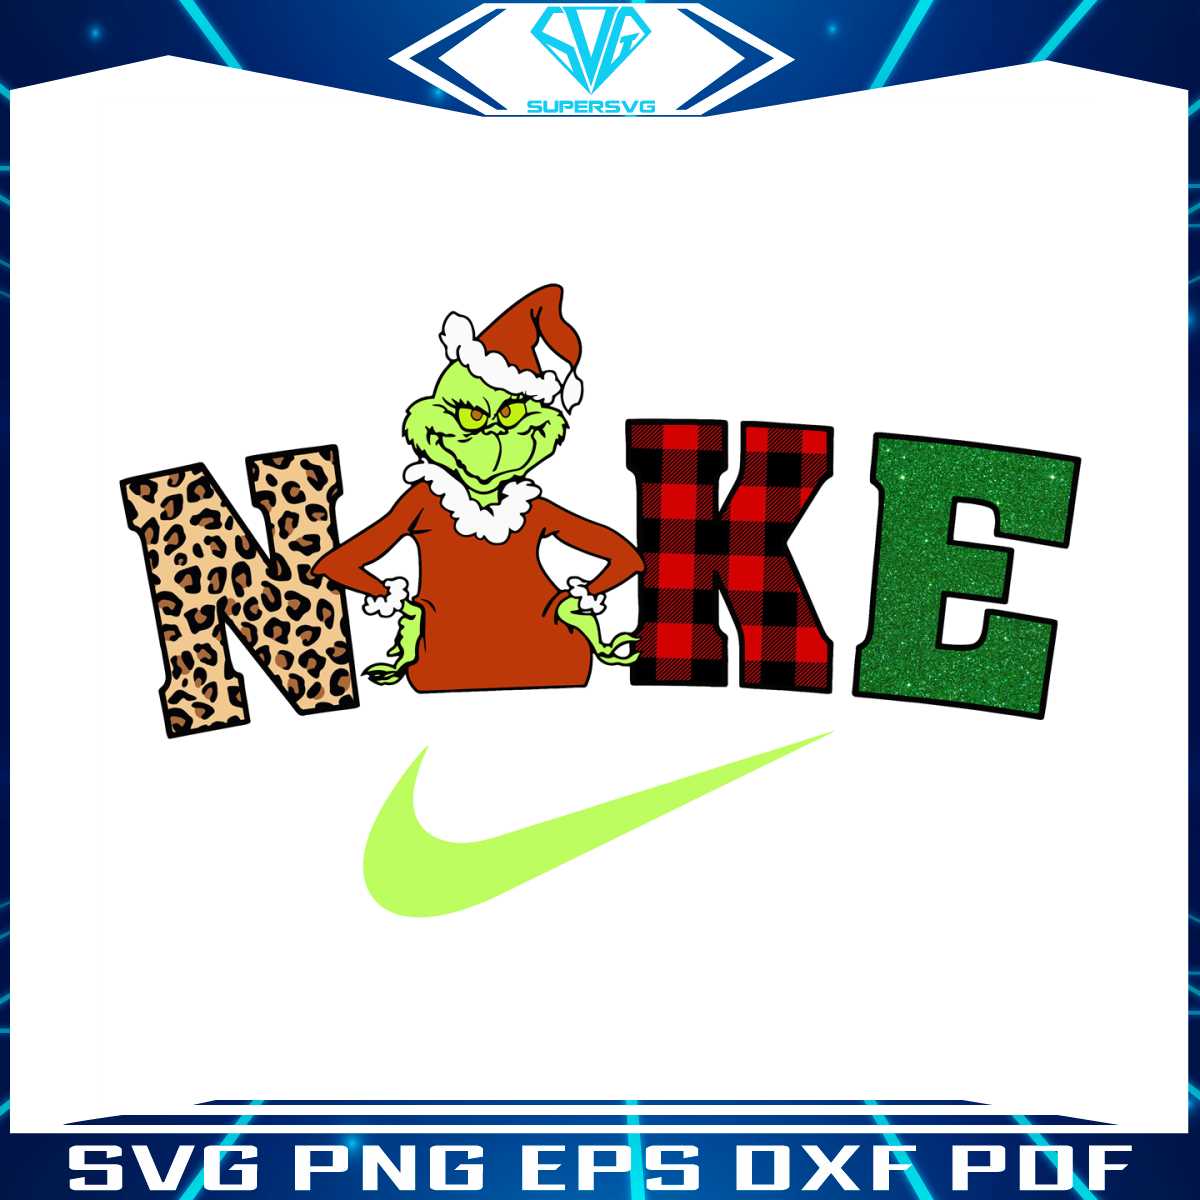 grinch-christmas-snow-nike-logo-gift-wrap-png-file-for-cricut